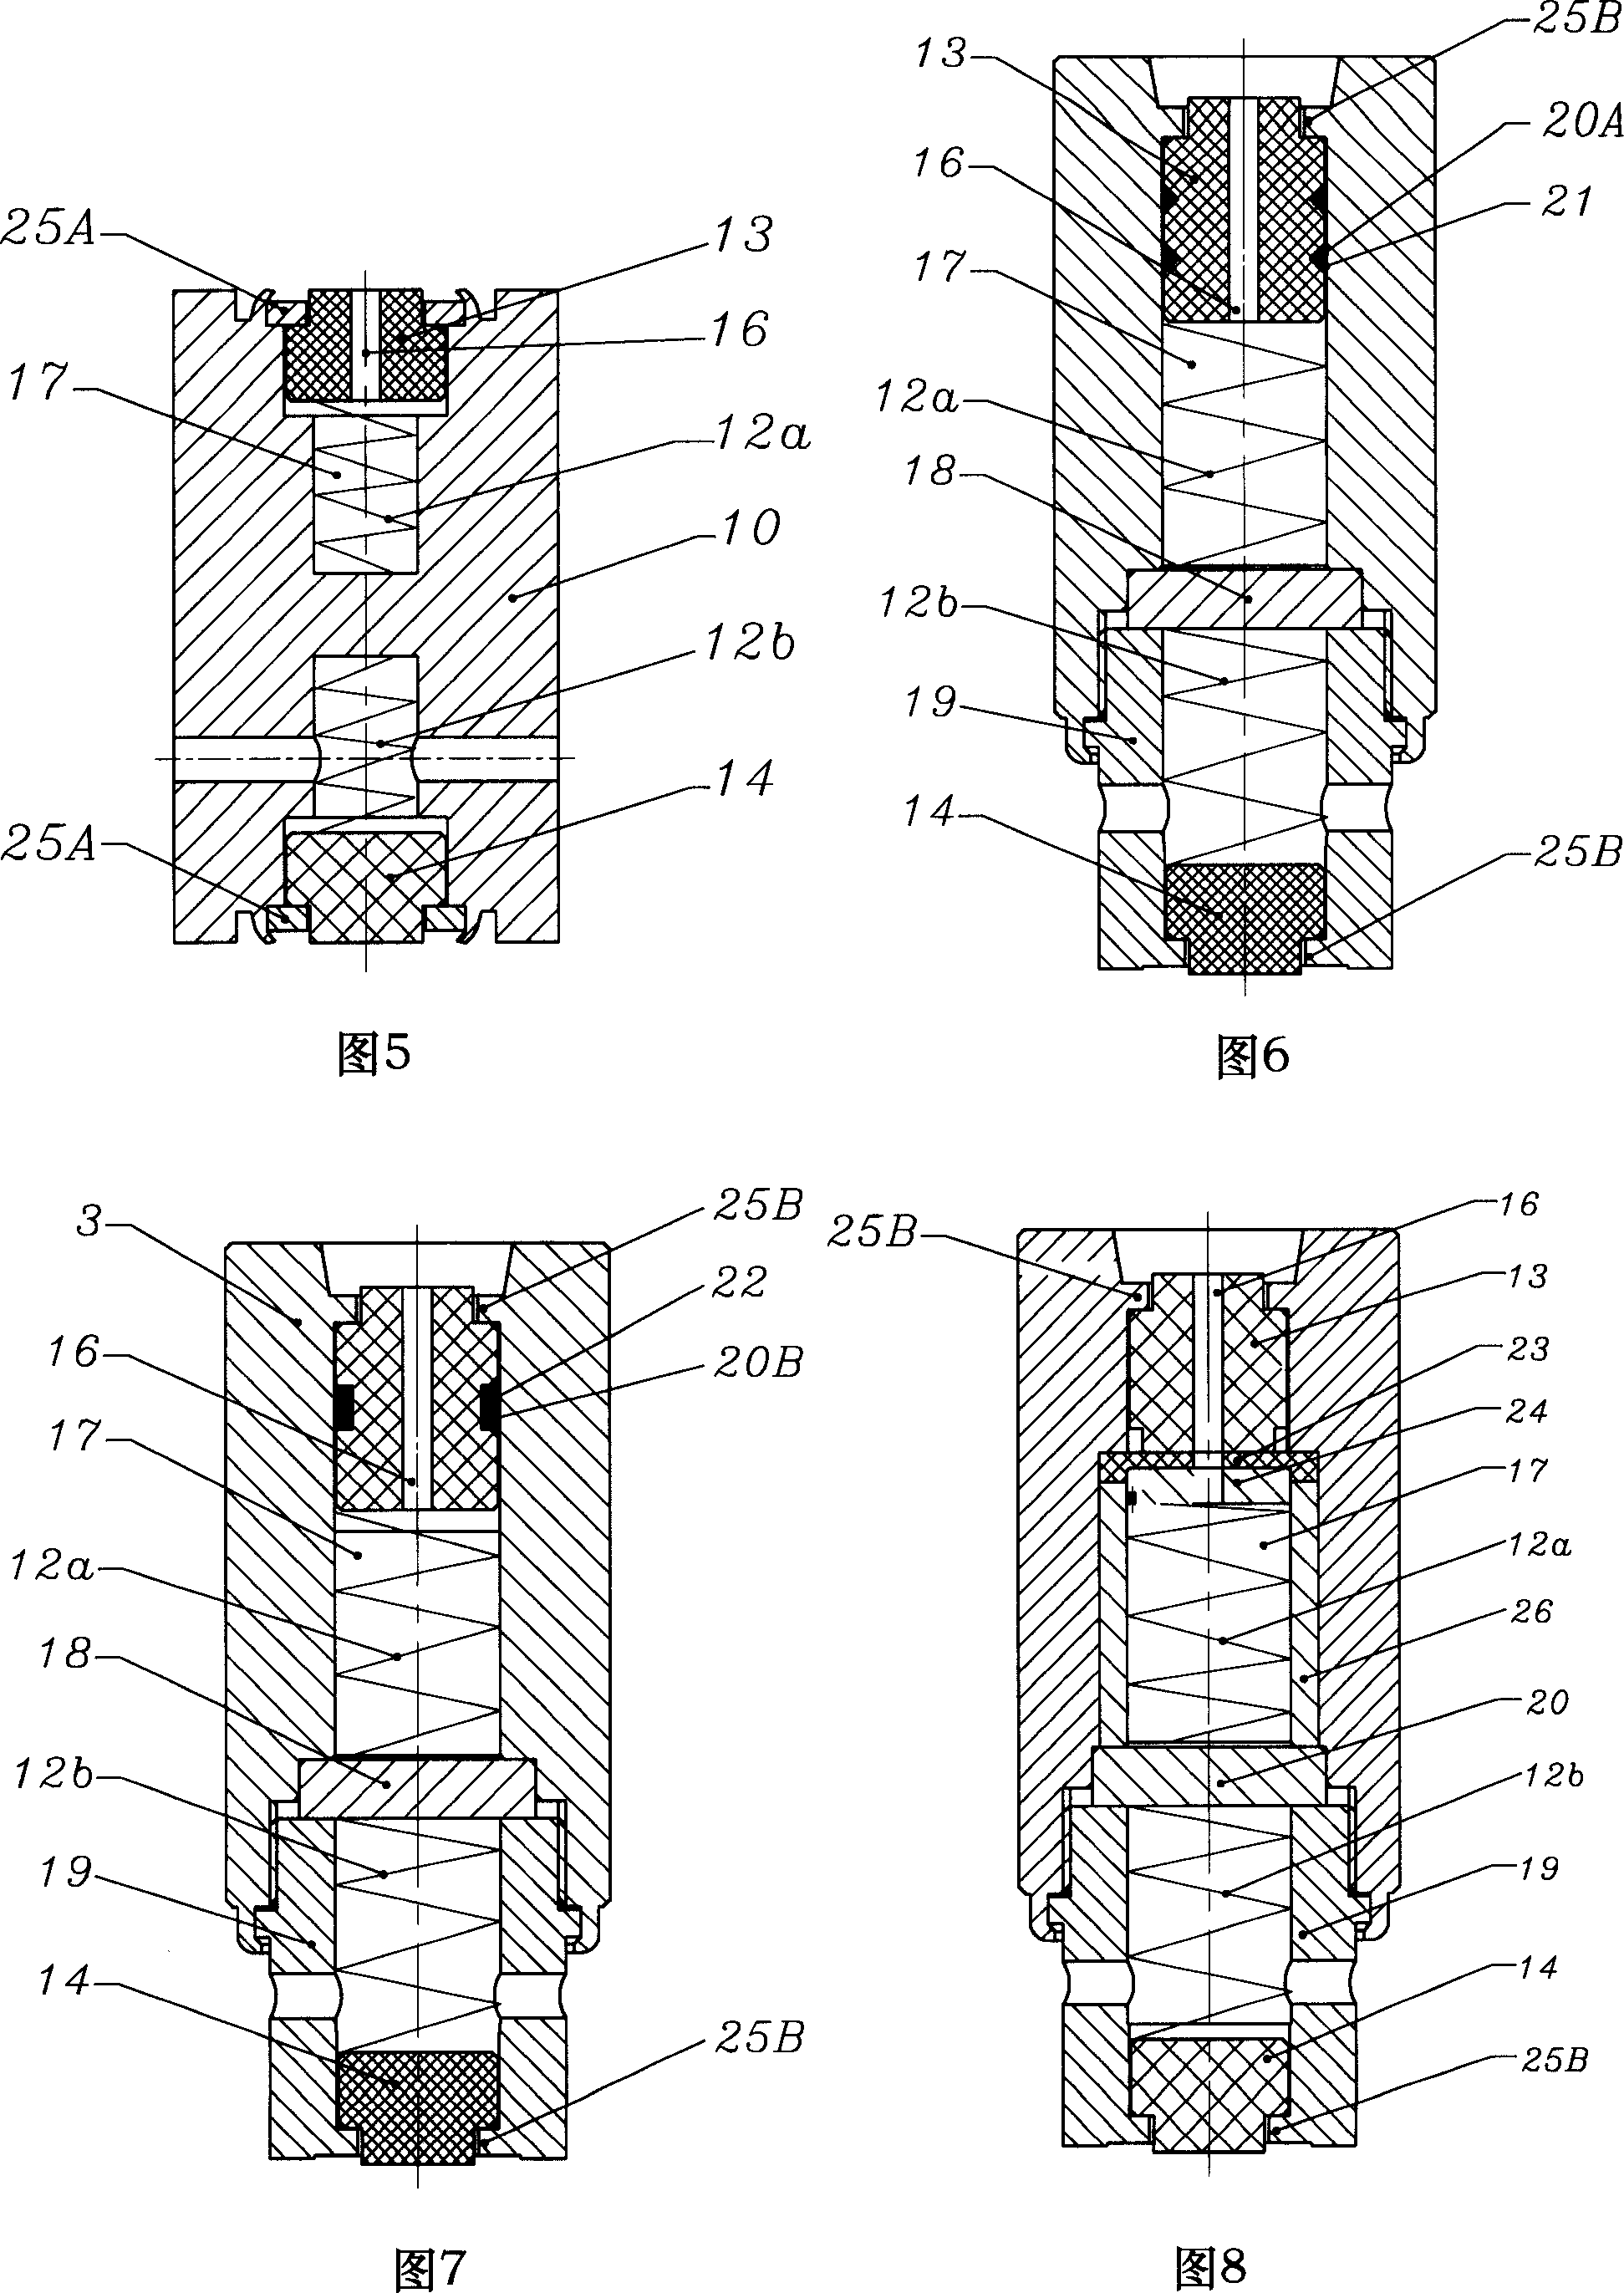 Straight moving type three-way electromagnetic valve